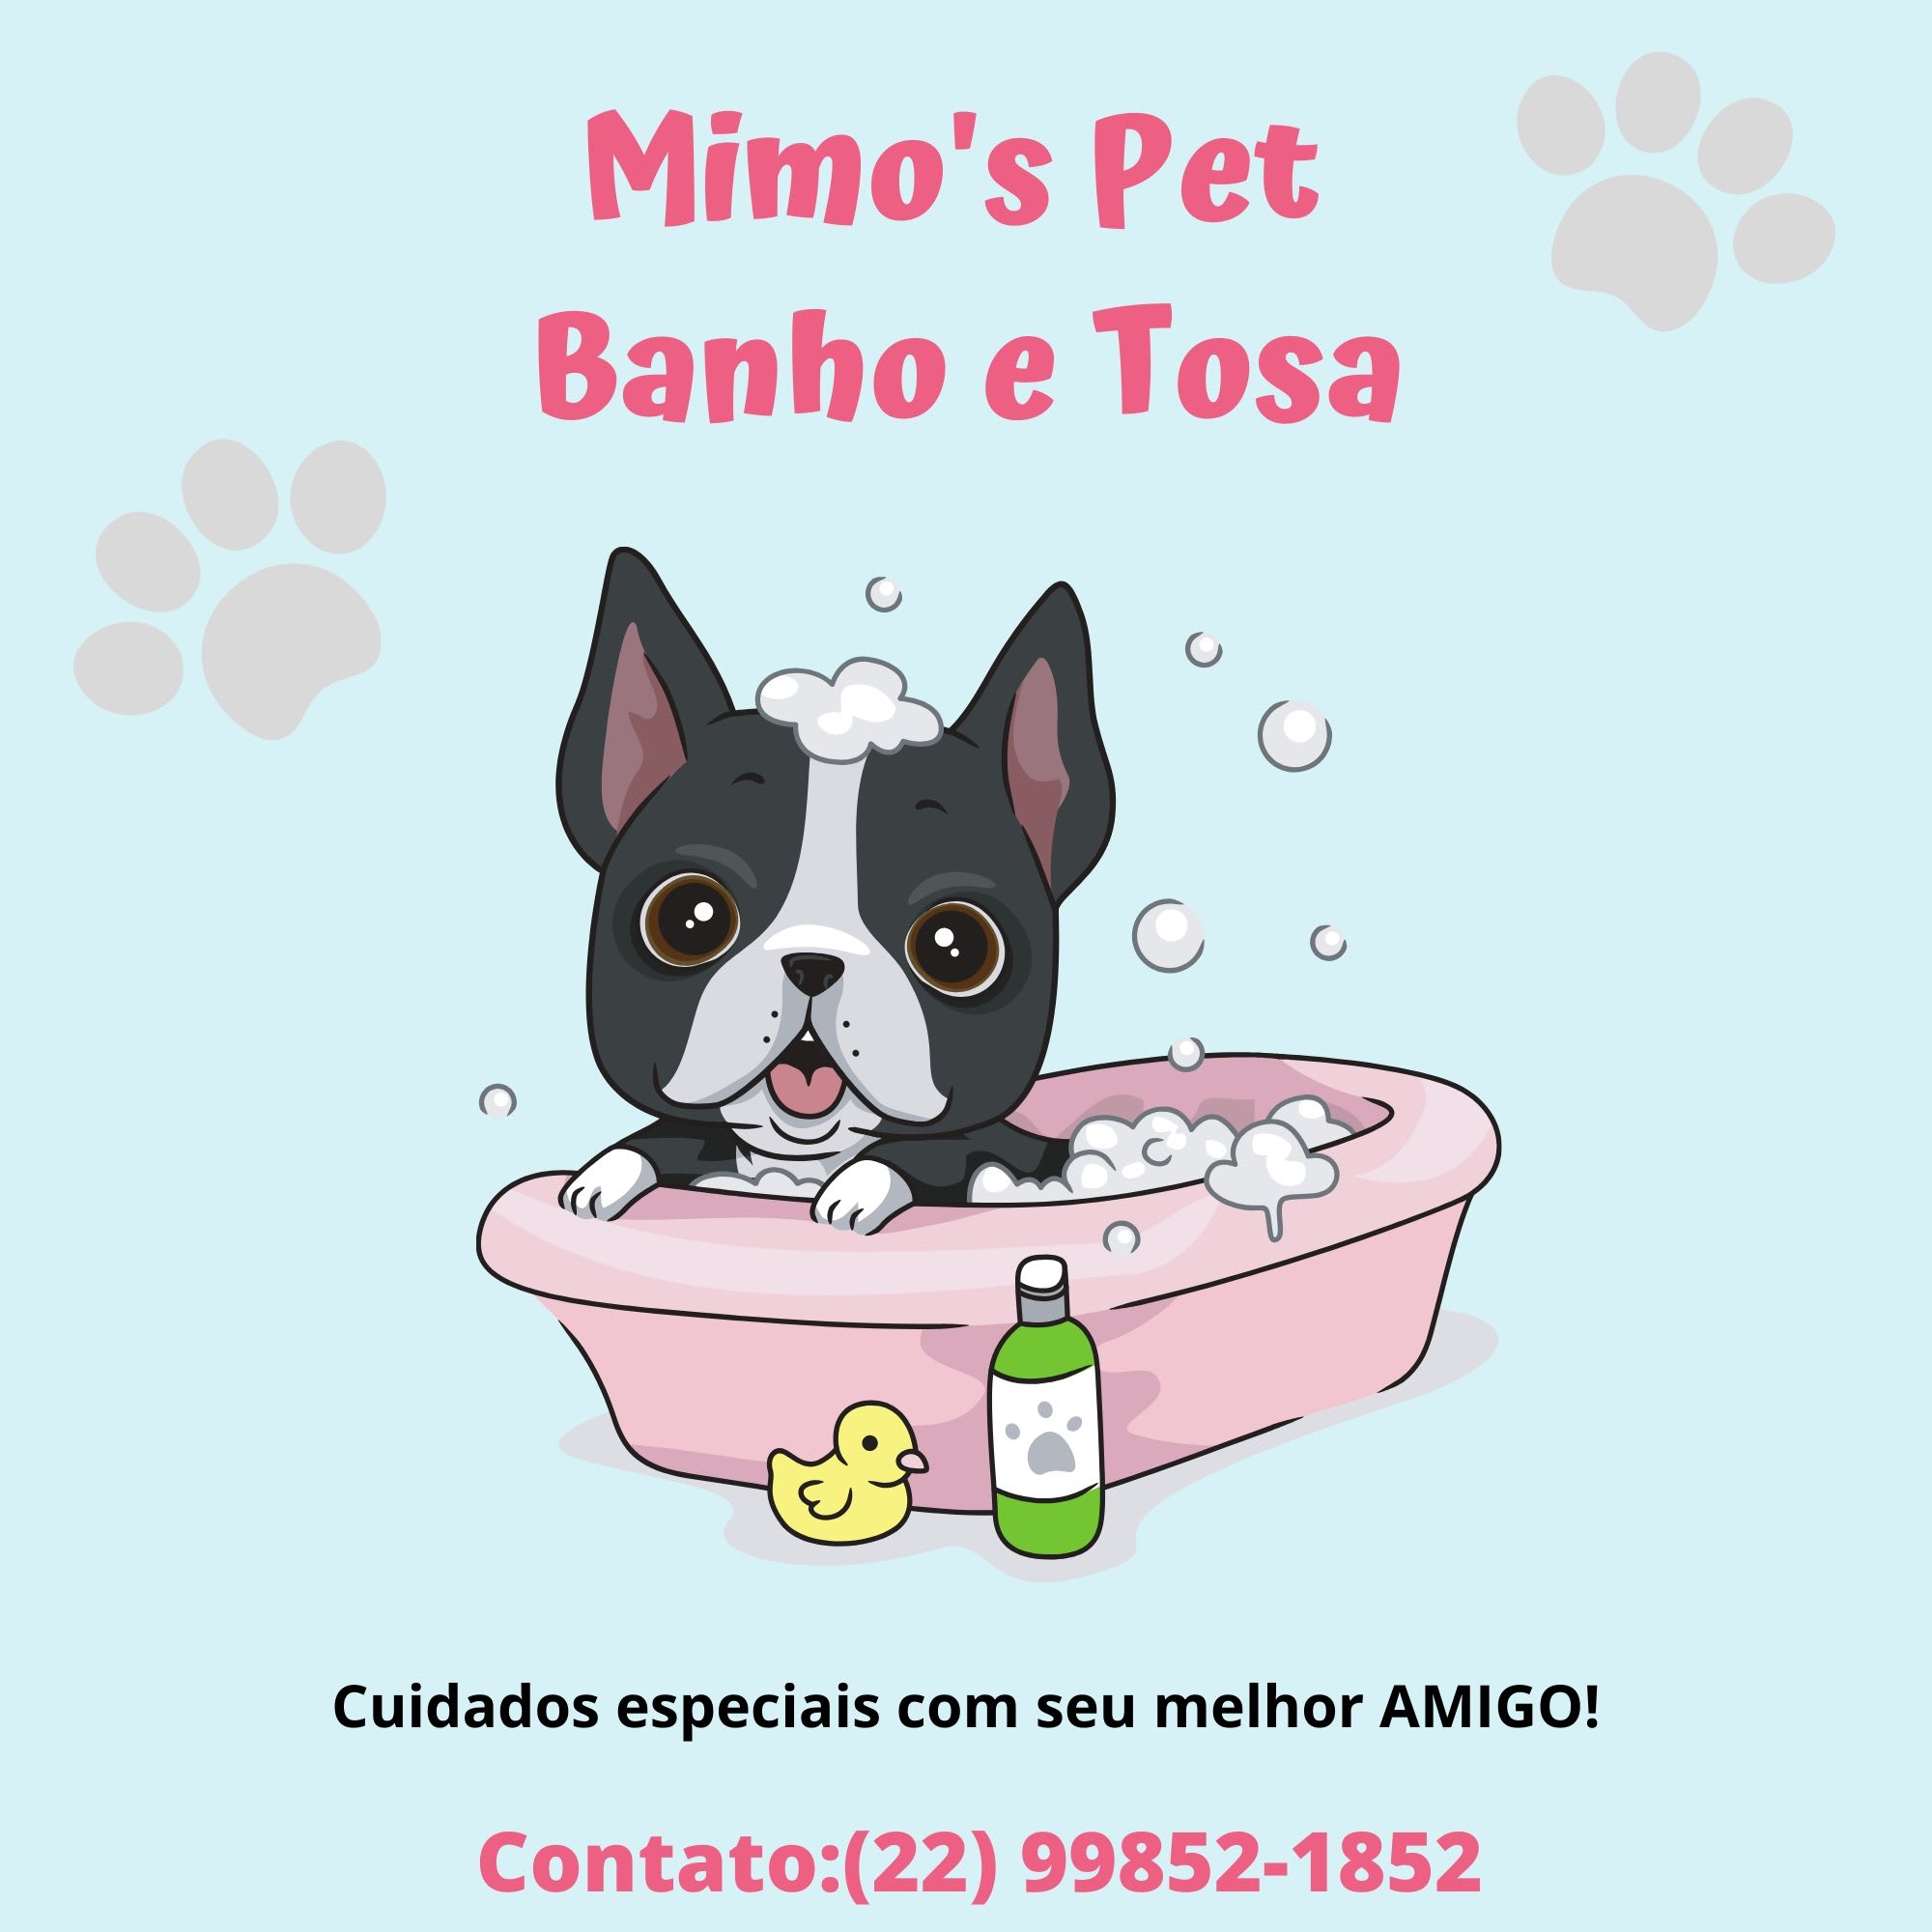 Mimo's Pet Hotel - Banho e Tosa